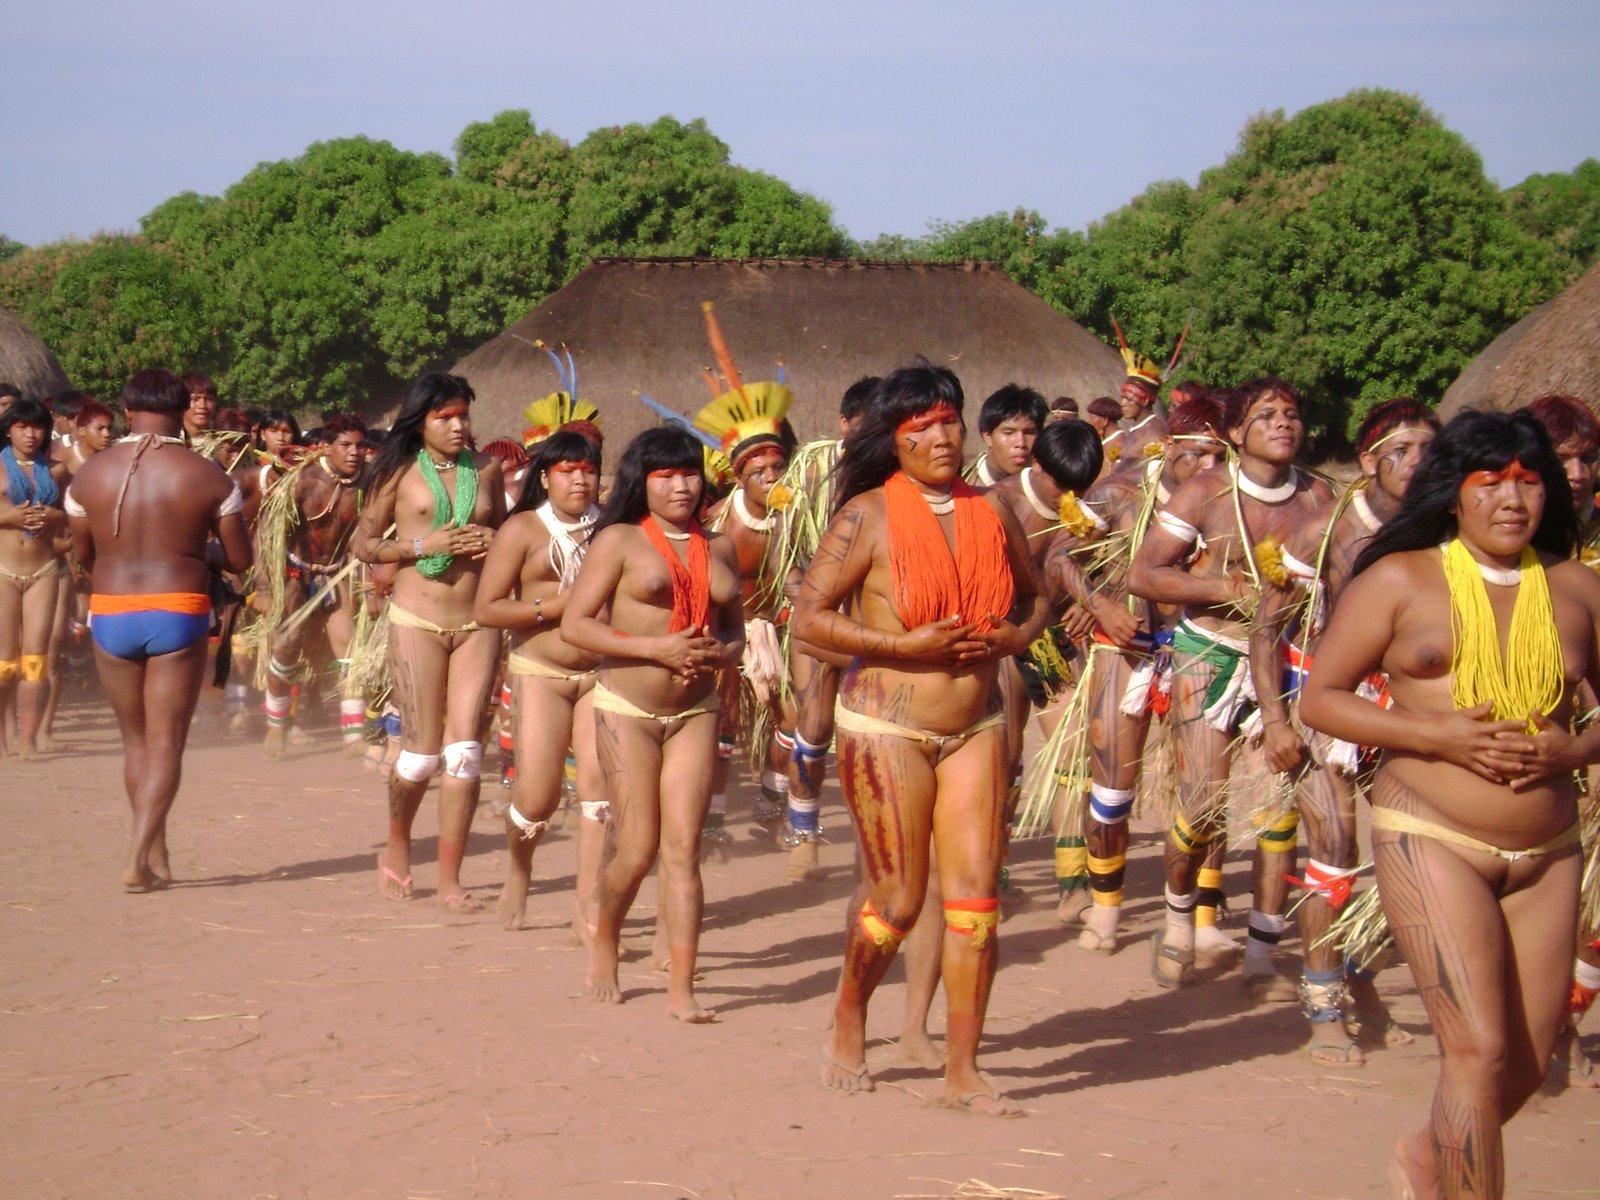 Nude indigenous amazon tribe photos anime toons